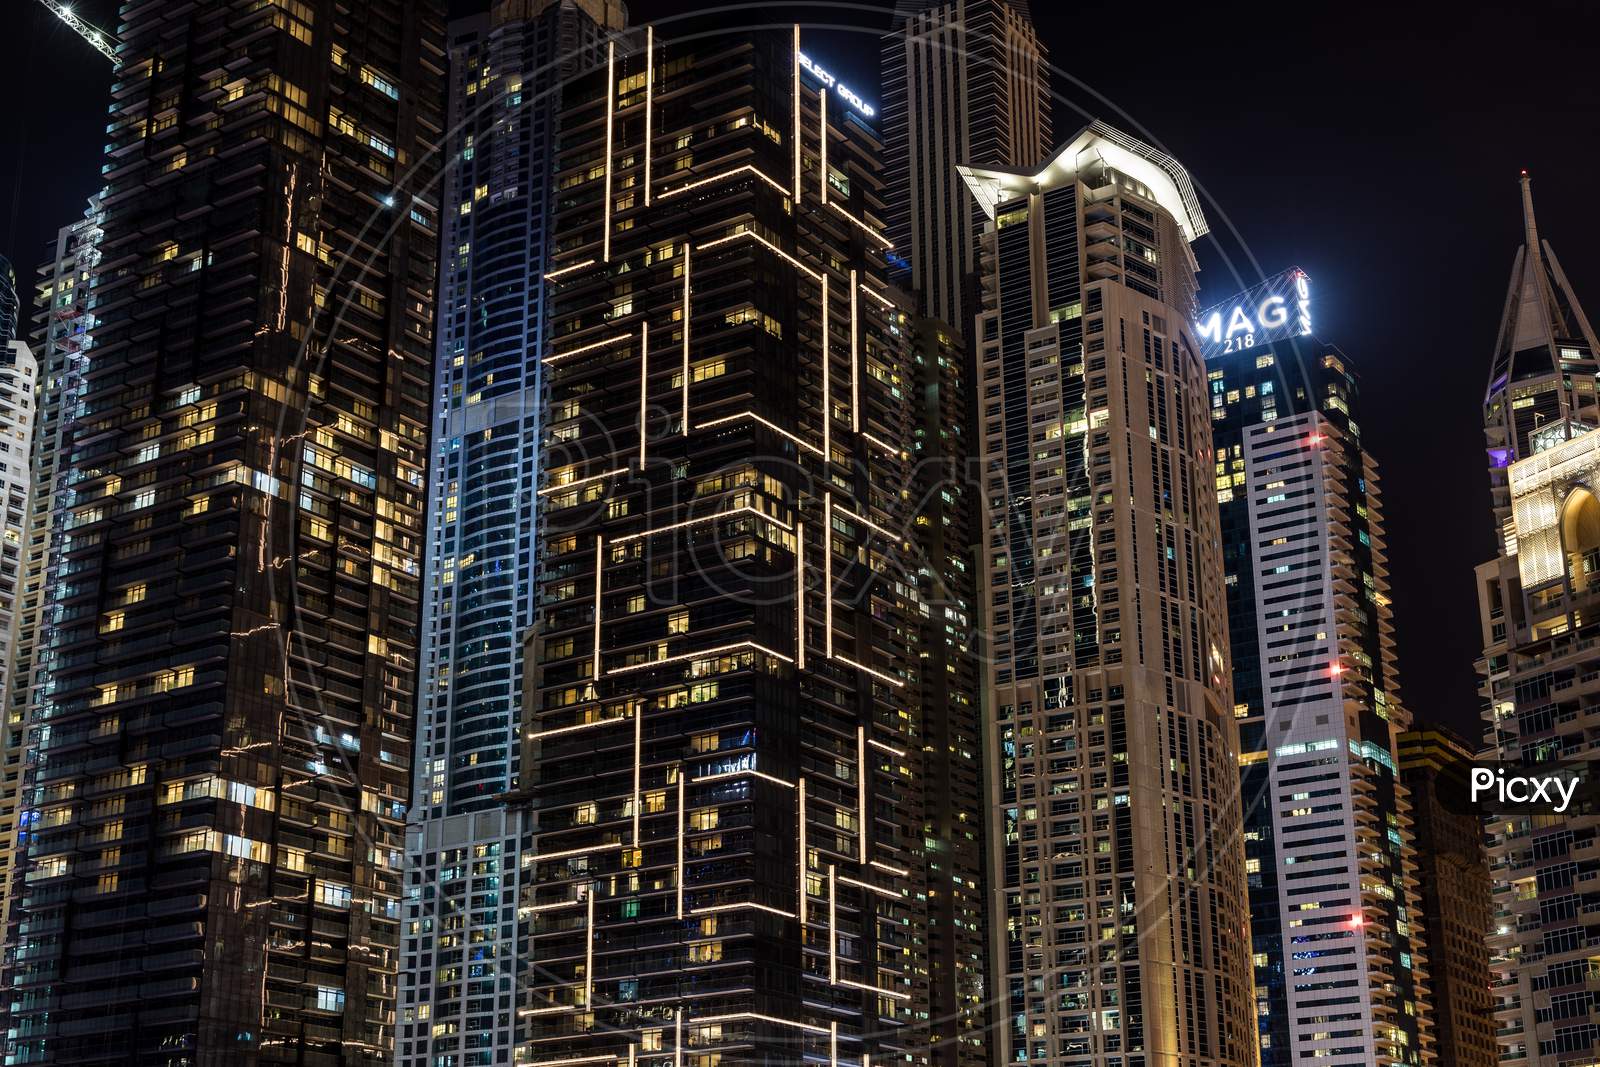 Dubai City Center Skyline, United Arab Emirates